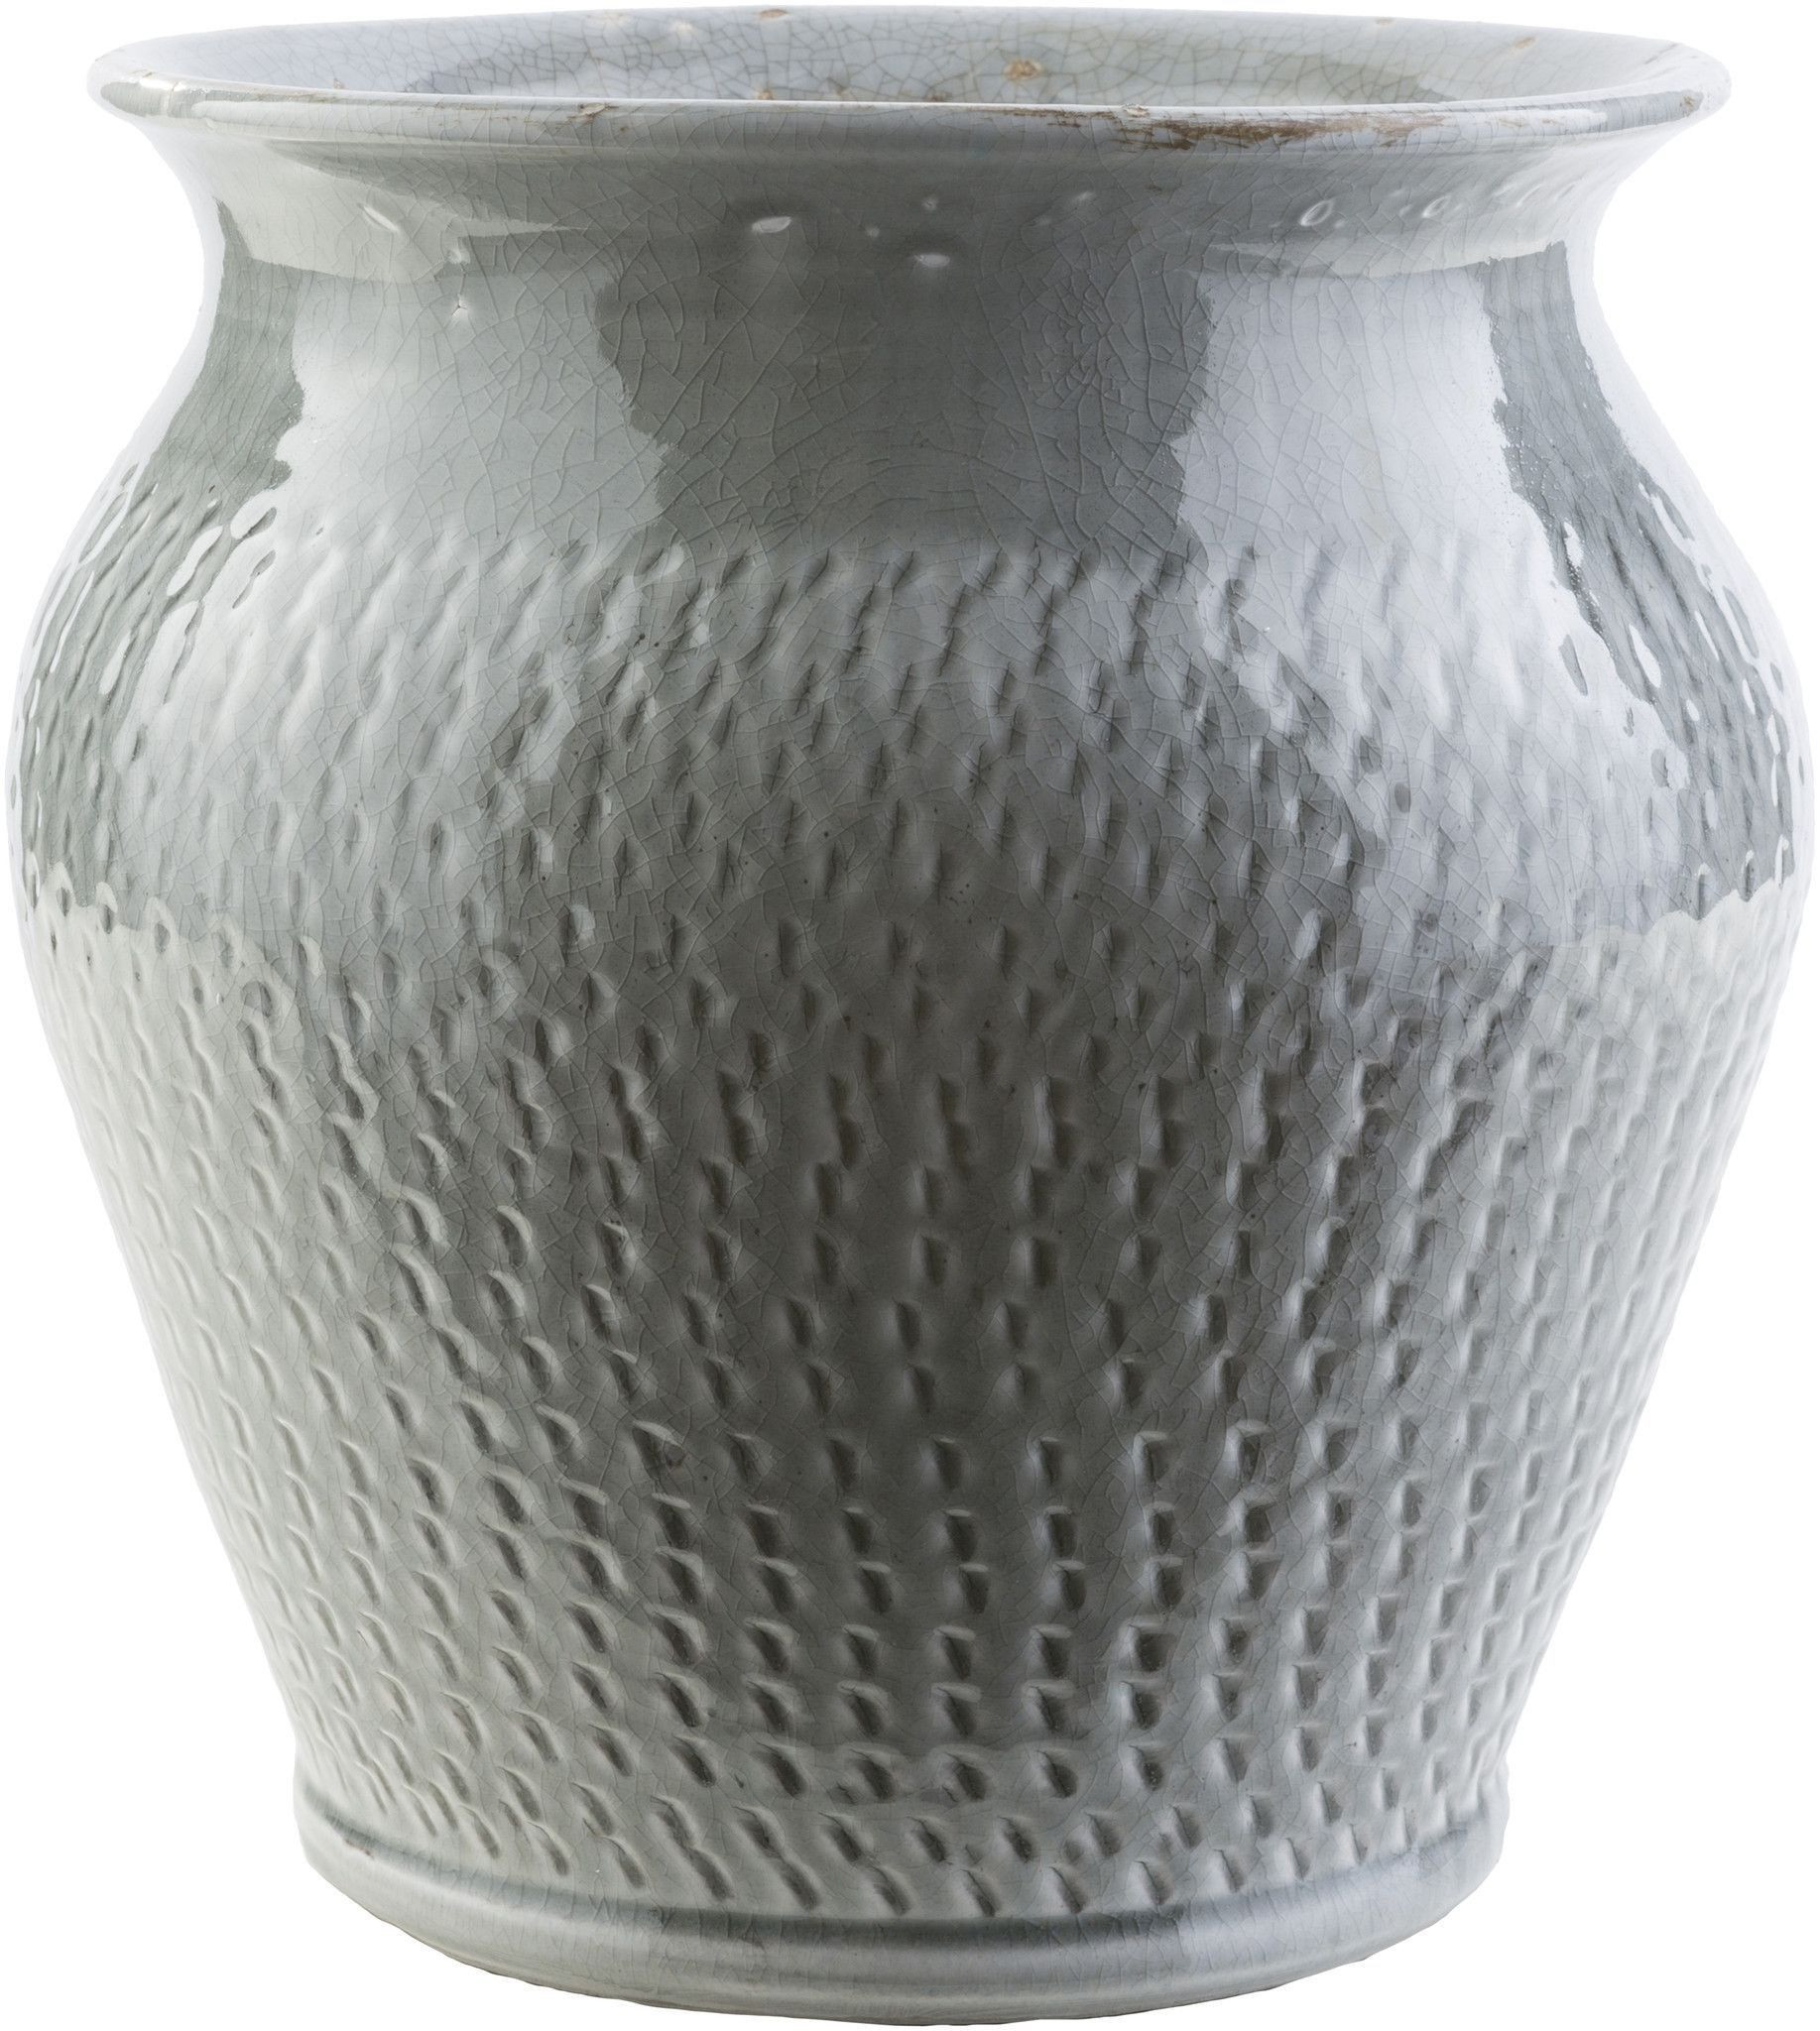 11 Popular Ikebana Vase Pottery 2024 free download ikebana vase pottery of white pottery vase inspirational luxury discount garden pottery regarding white pottery vase inspirational luxury discount garden pottery novitalas